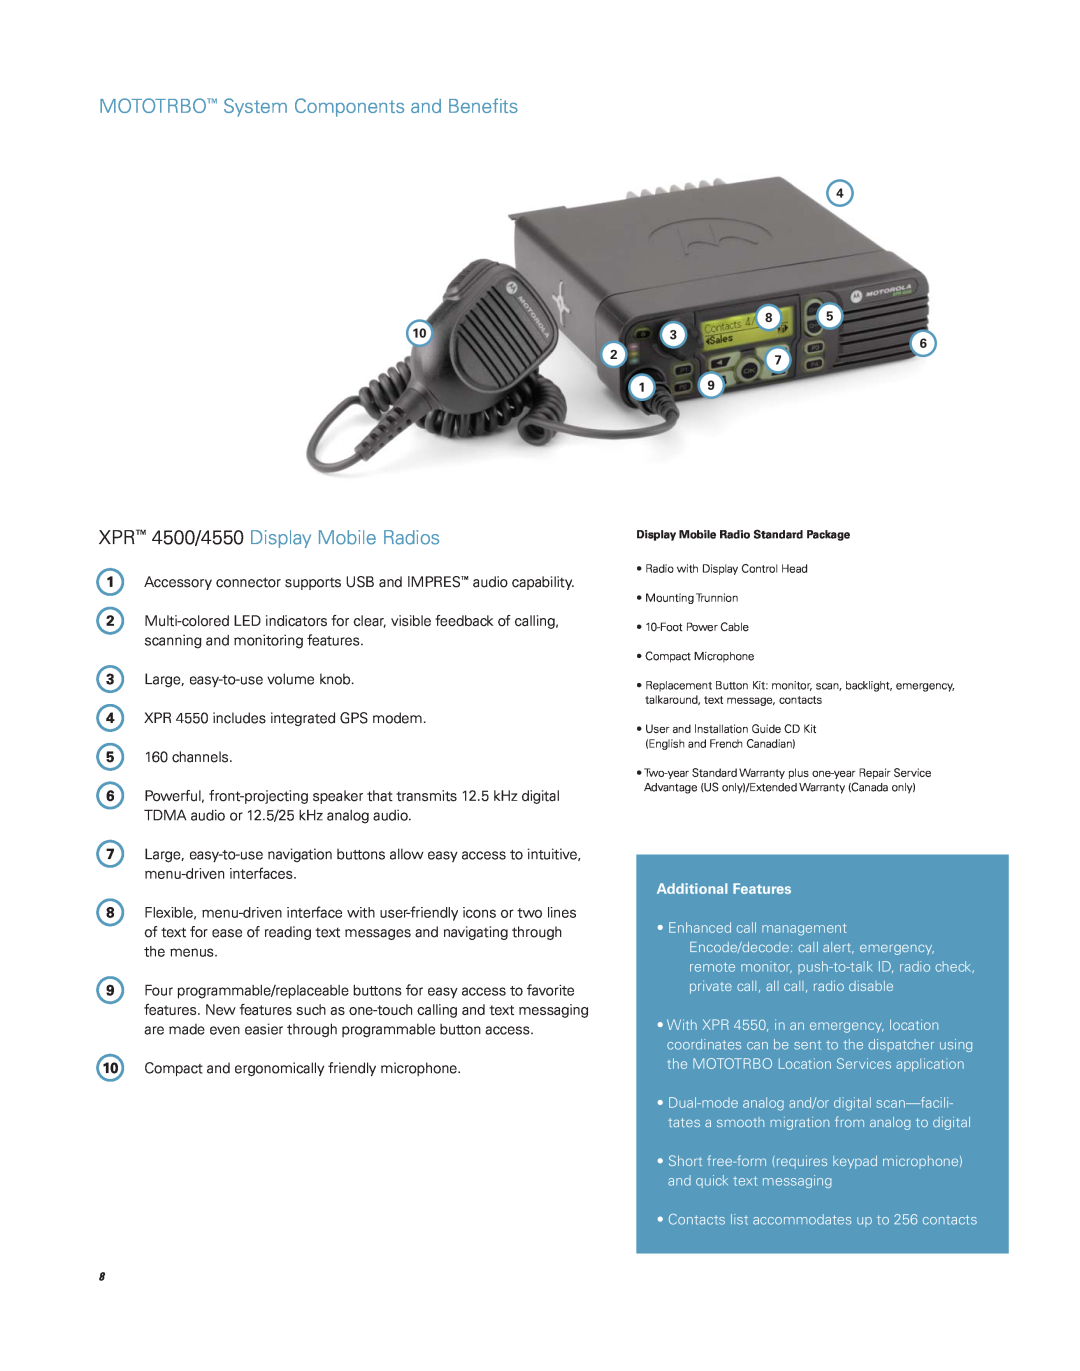 Motorola Professional Digital Two-Way Radio System brochure XPR 4500/4550 Display Mobile Radios 